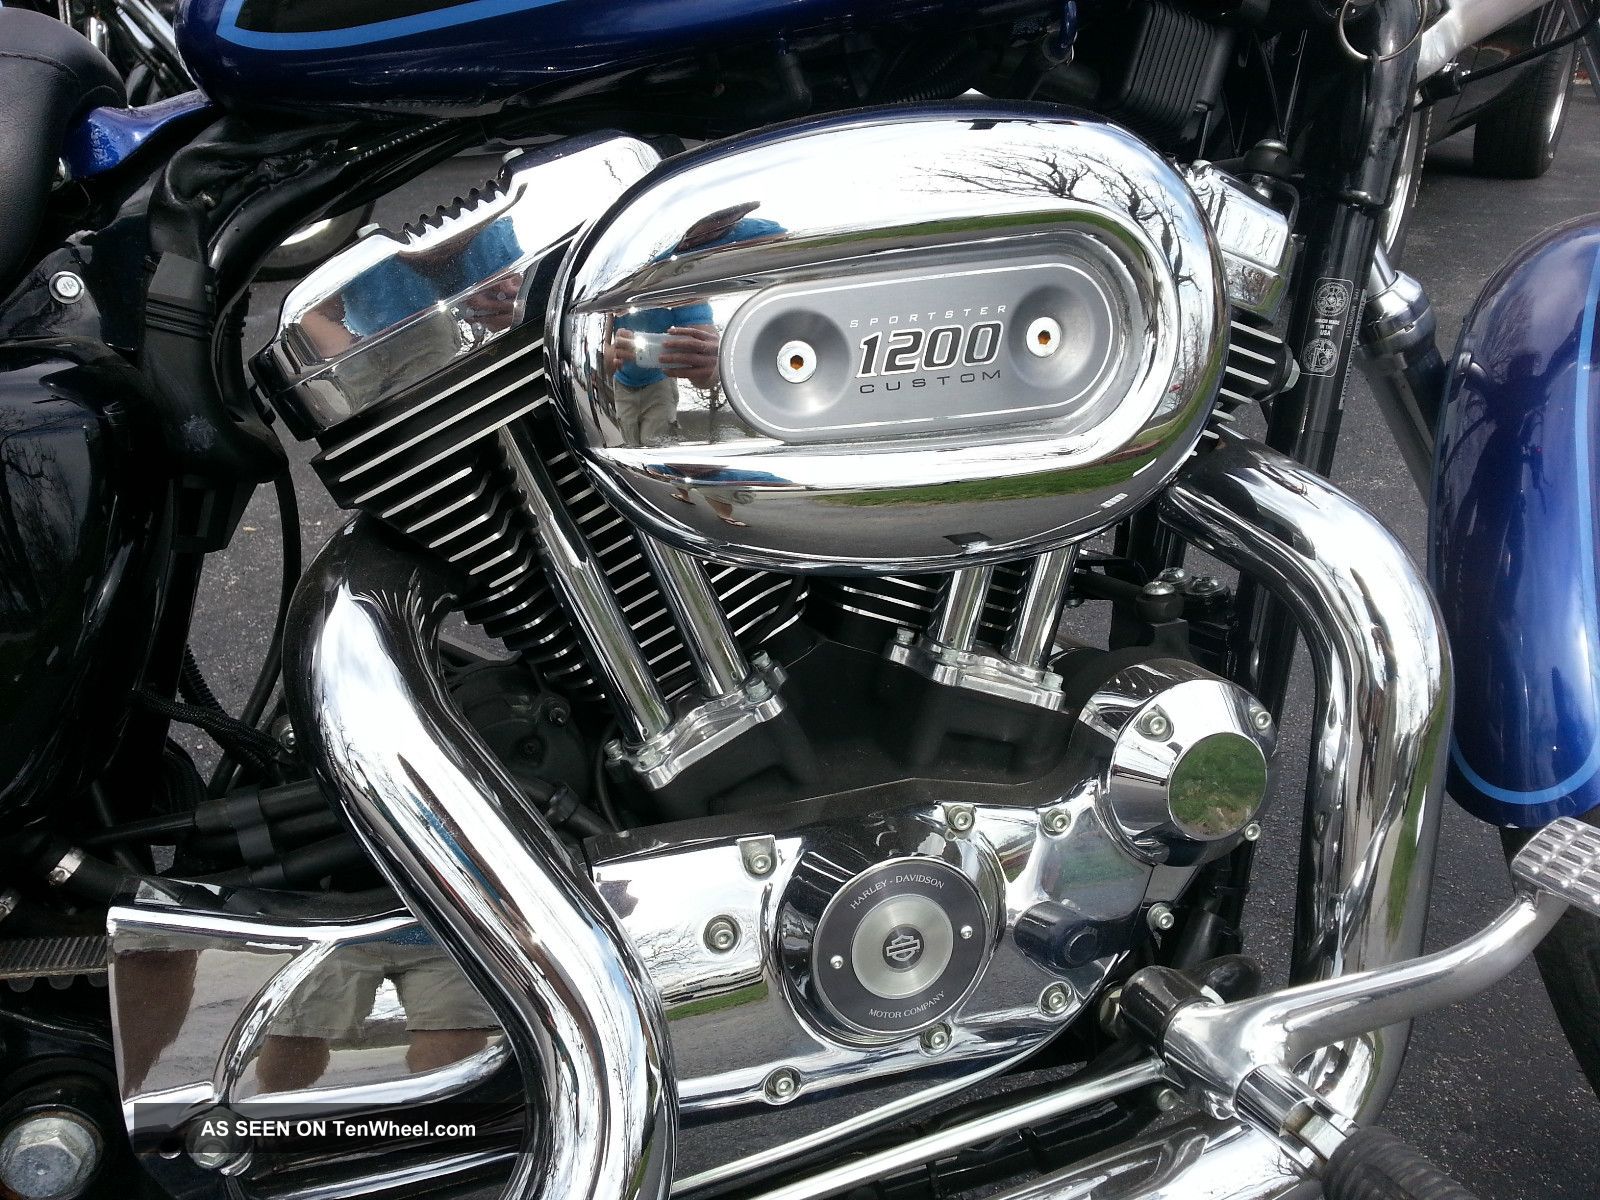 2006 Harley Davidson Sportster 1200 Blue / Black Bg3 Exhaust